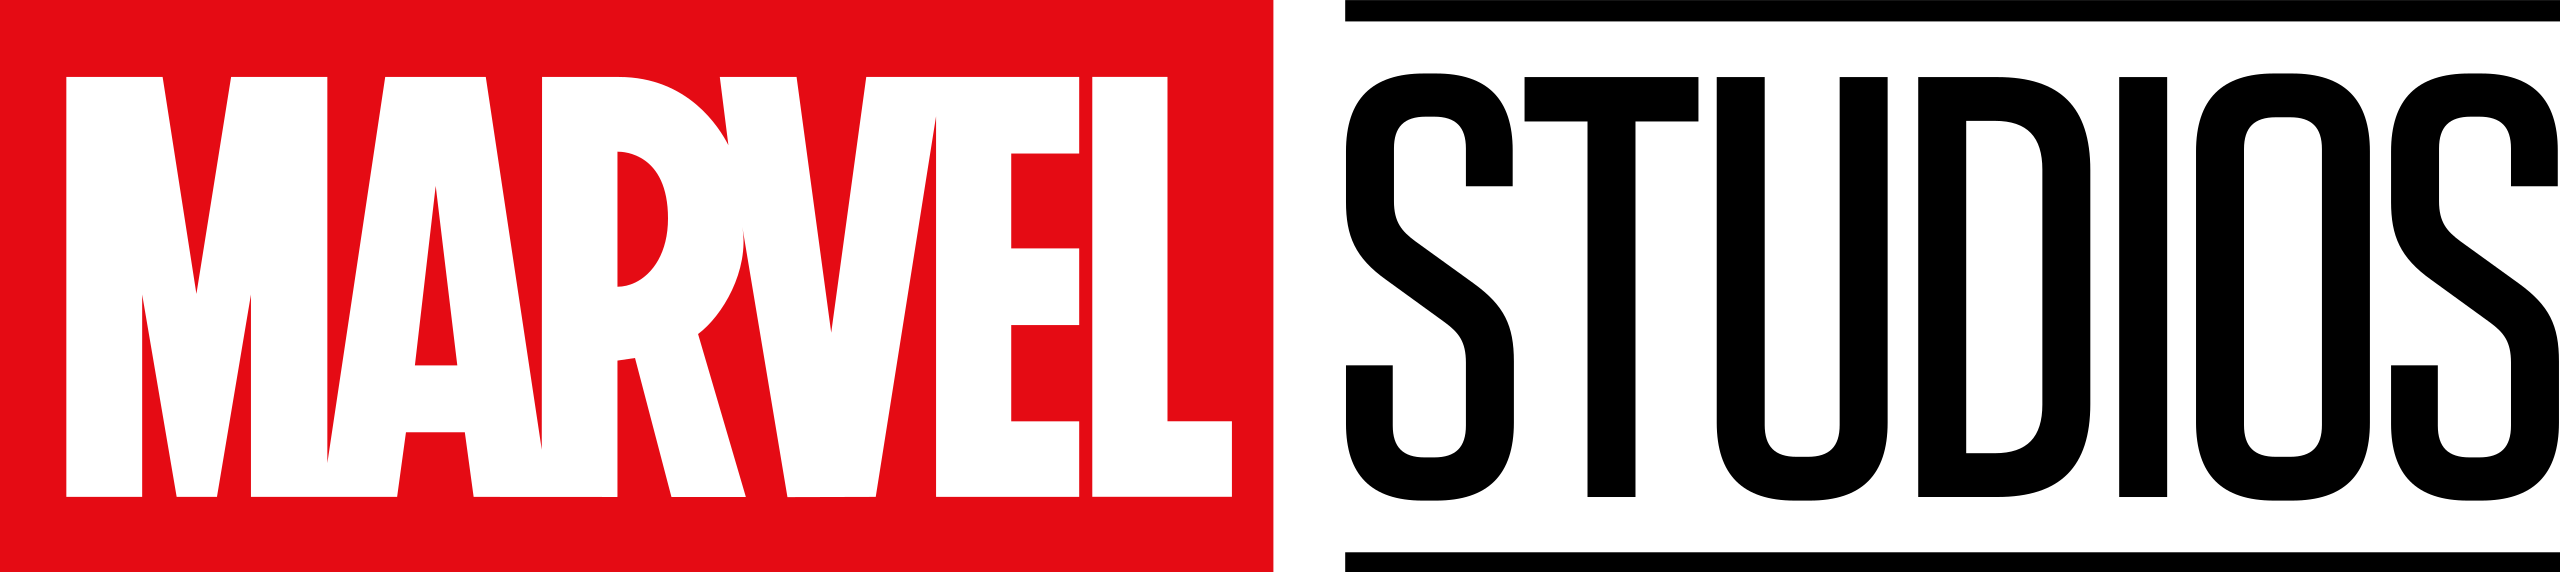 Marvel Studios logo.png